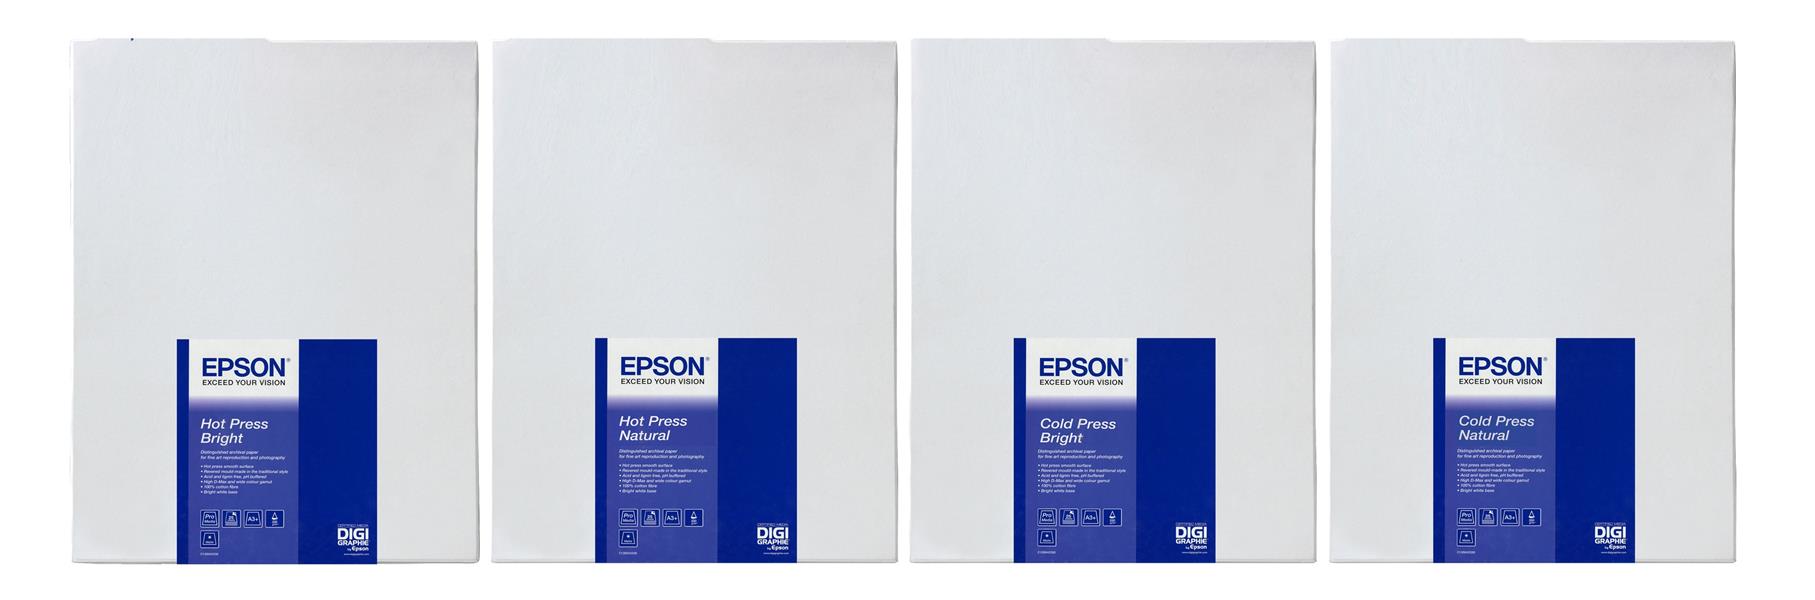 Epson Cold Press Natural 17""x 15m